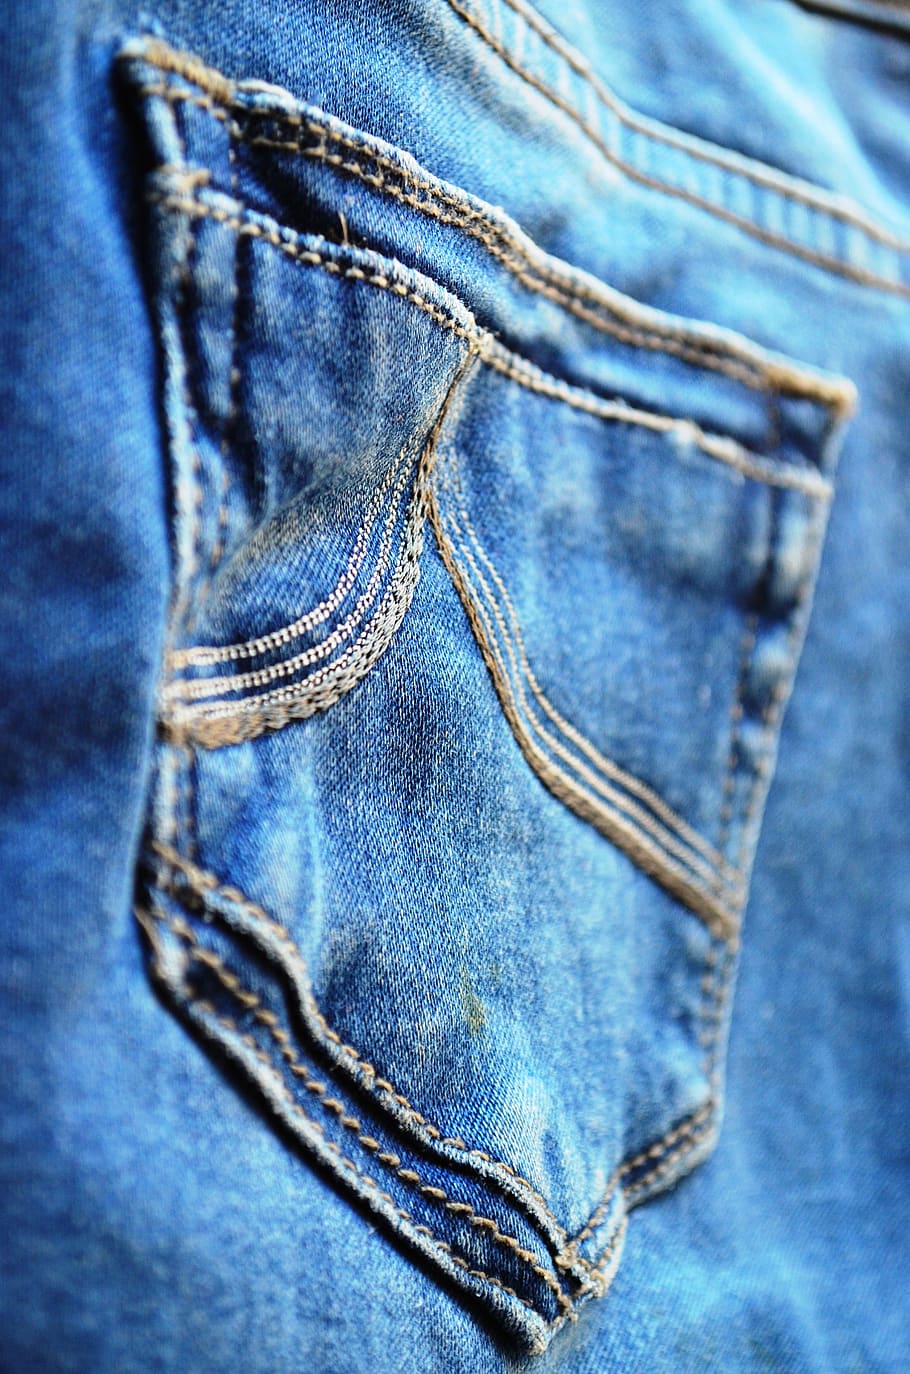 jeans, blue, pocket, fashion, clothing, casual, denim, cotton, cloth, trousers